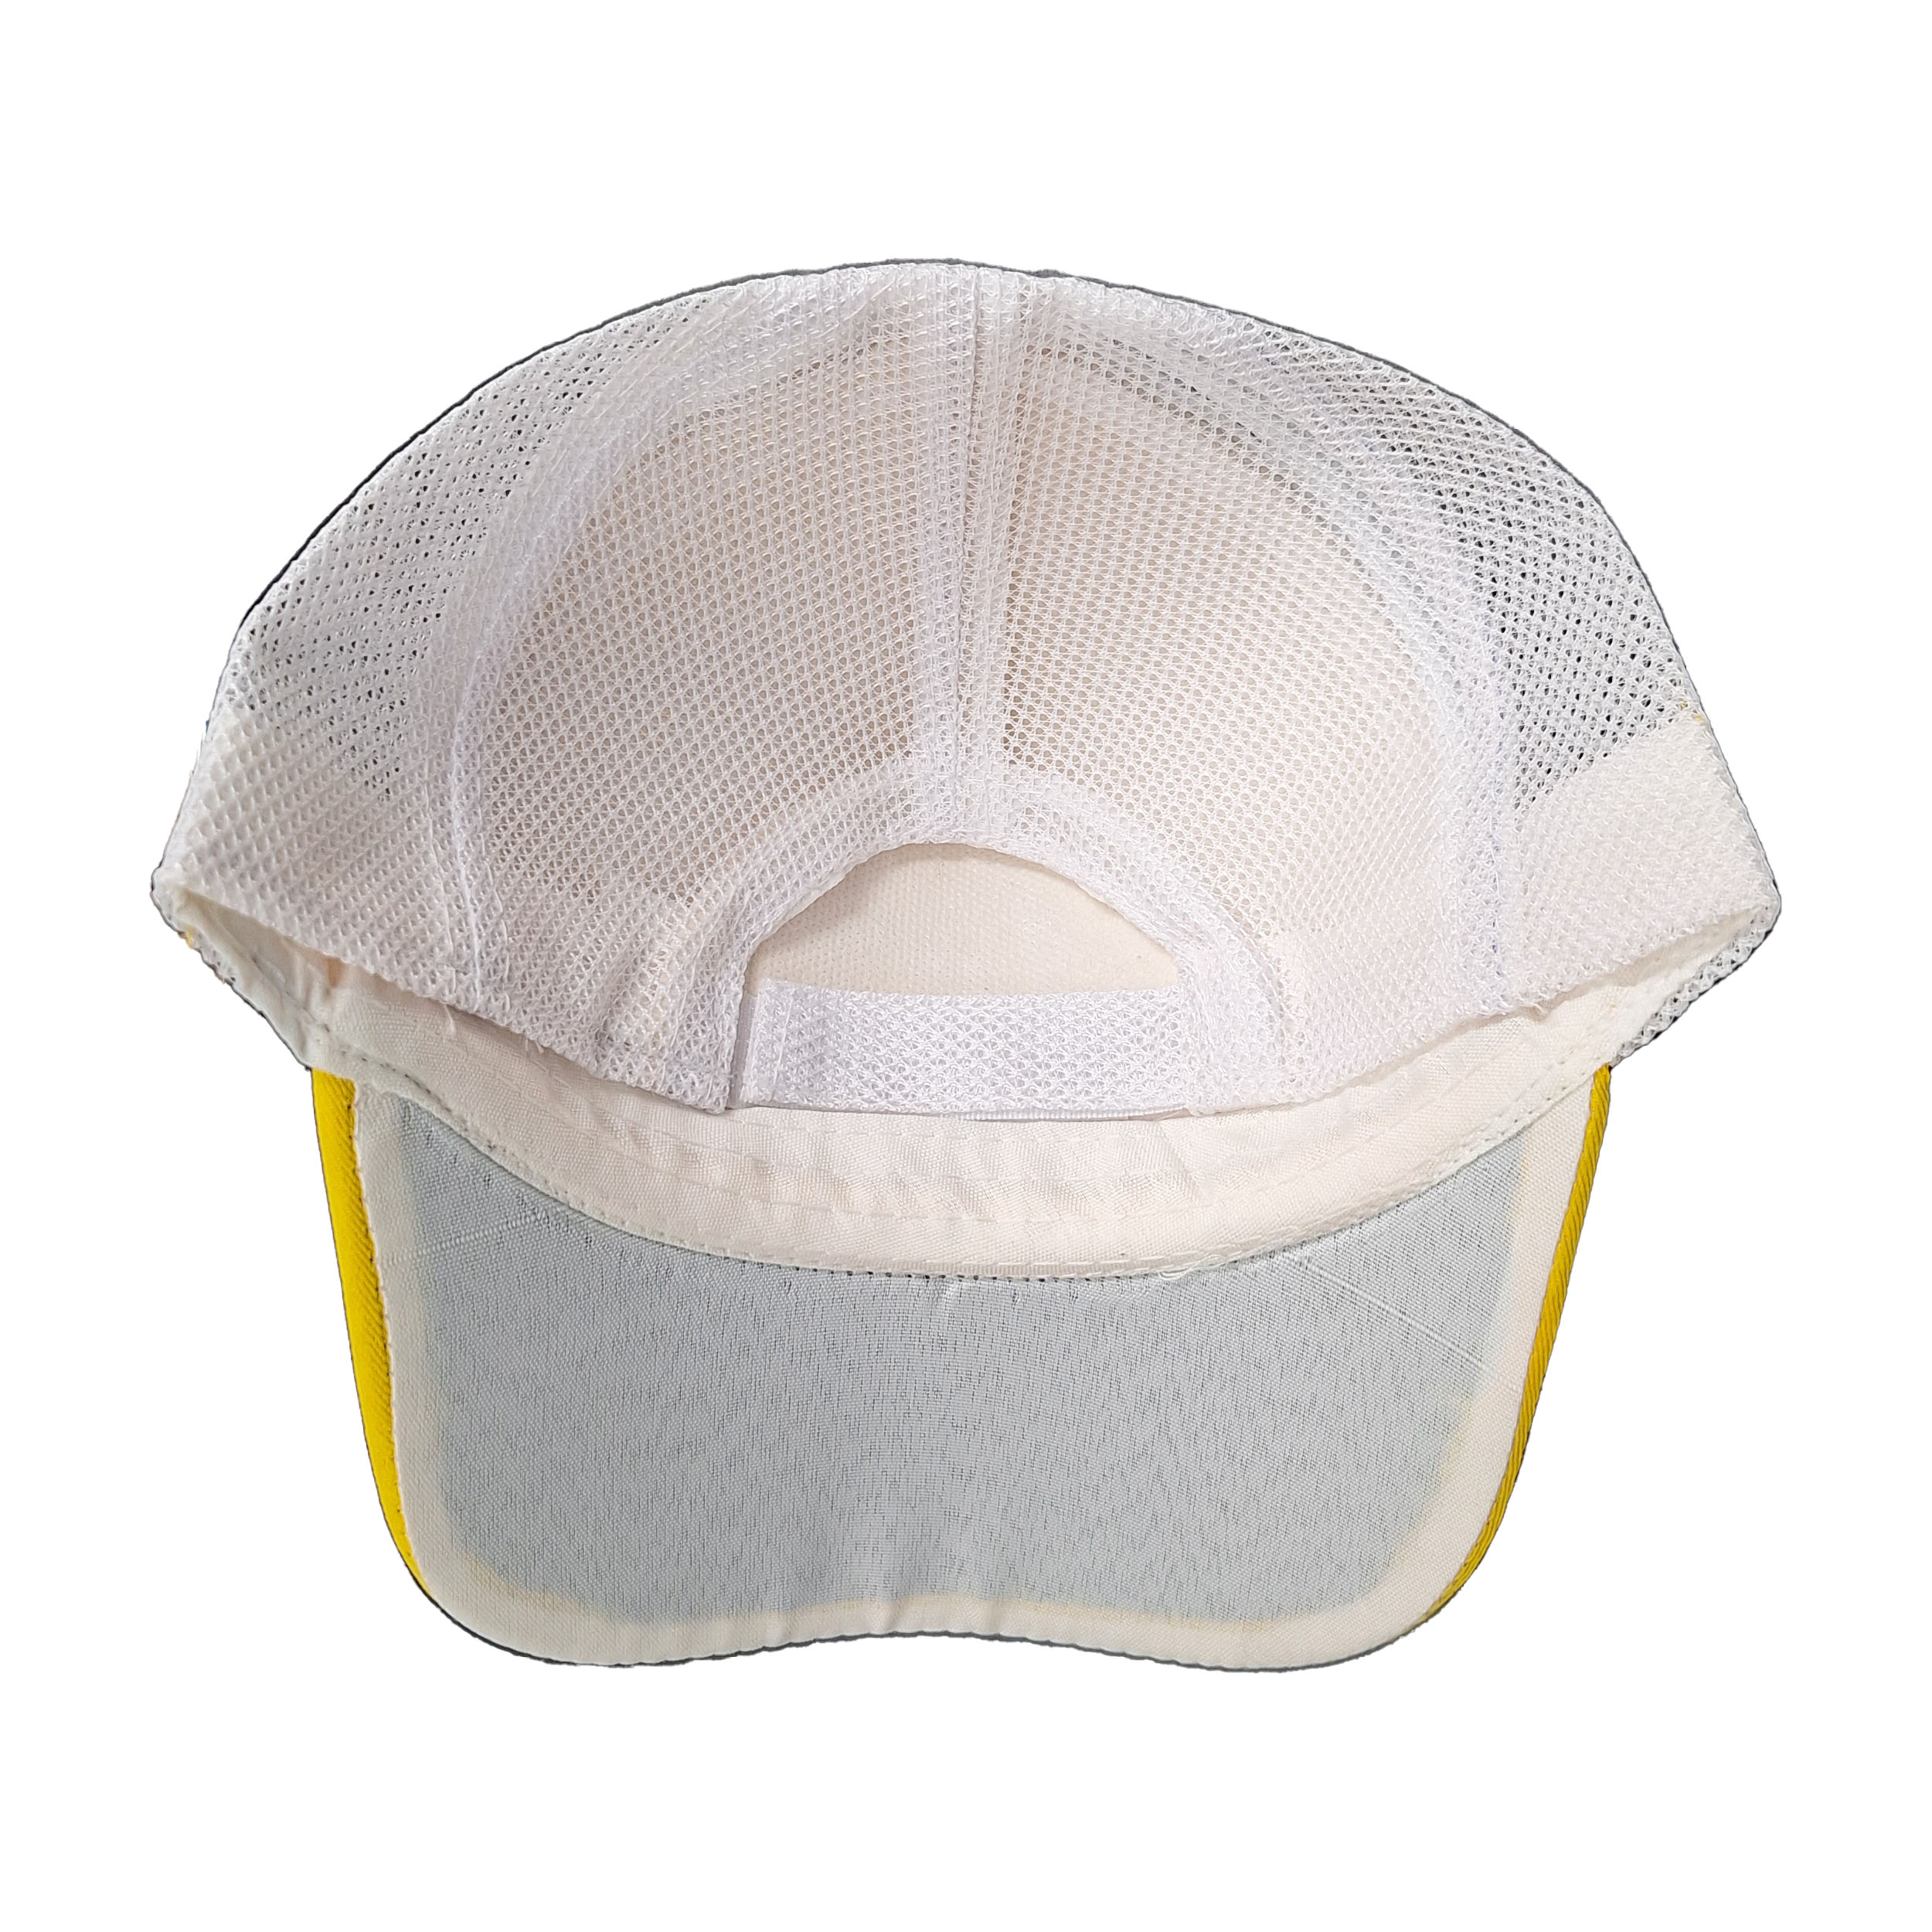 کلاه کپ بچگانه مدل BDDY کد 1190 رنگ زرد -  - 2